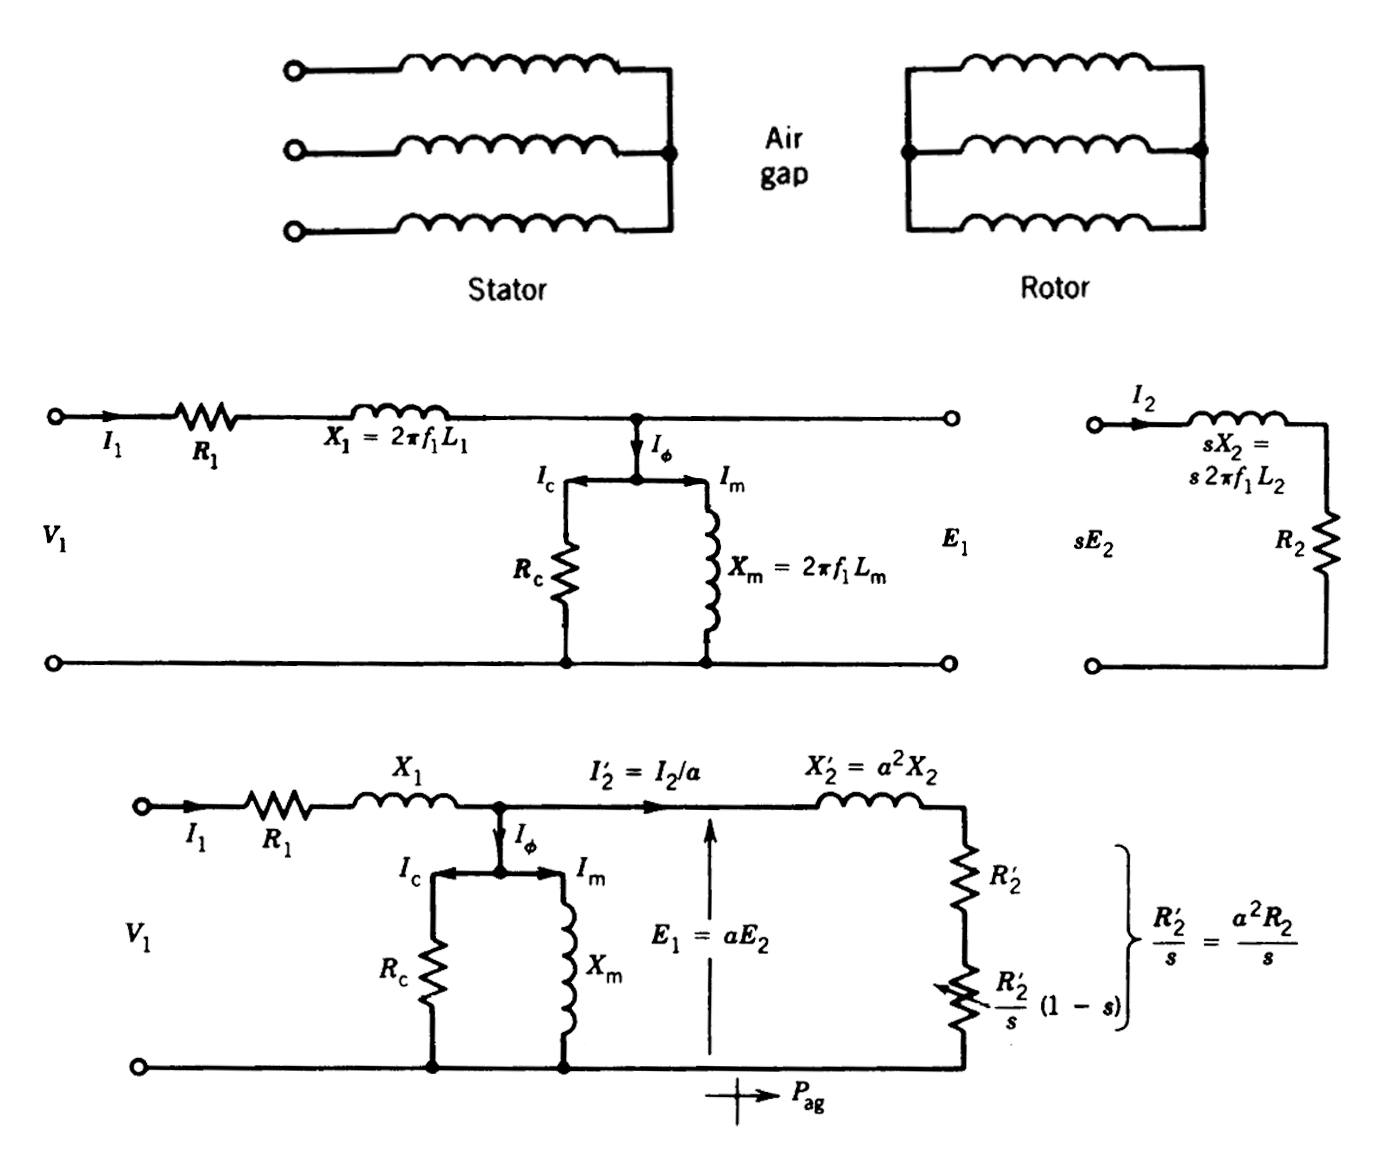 Equivalent Circuit Model of IM-1